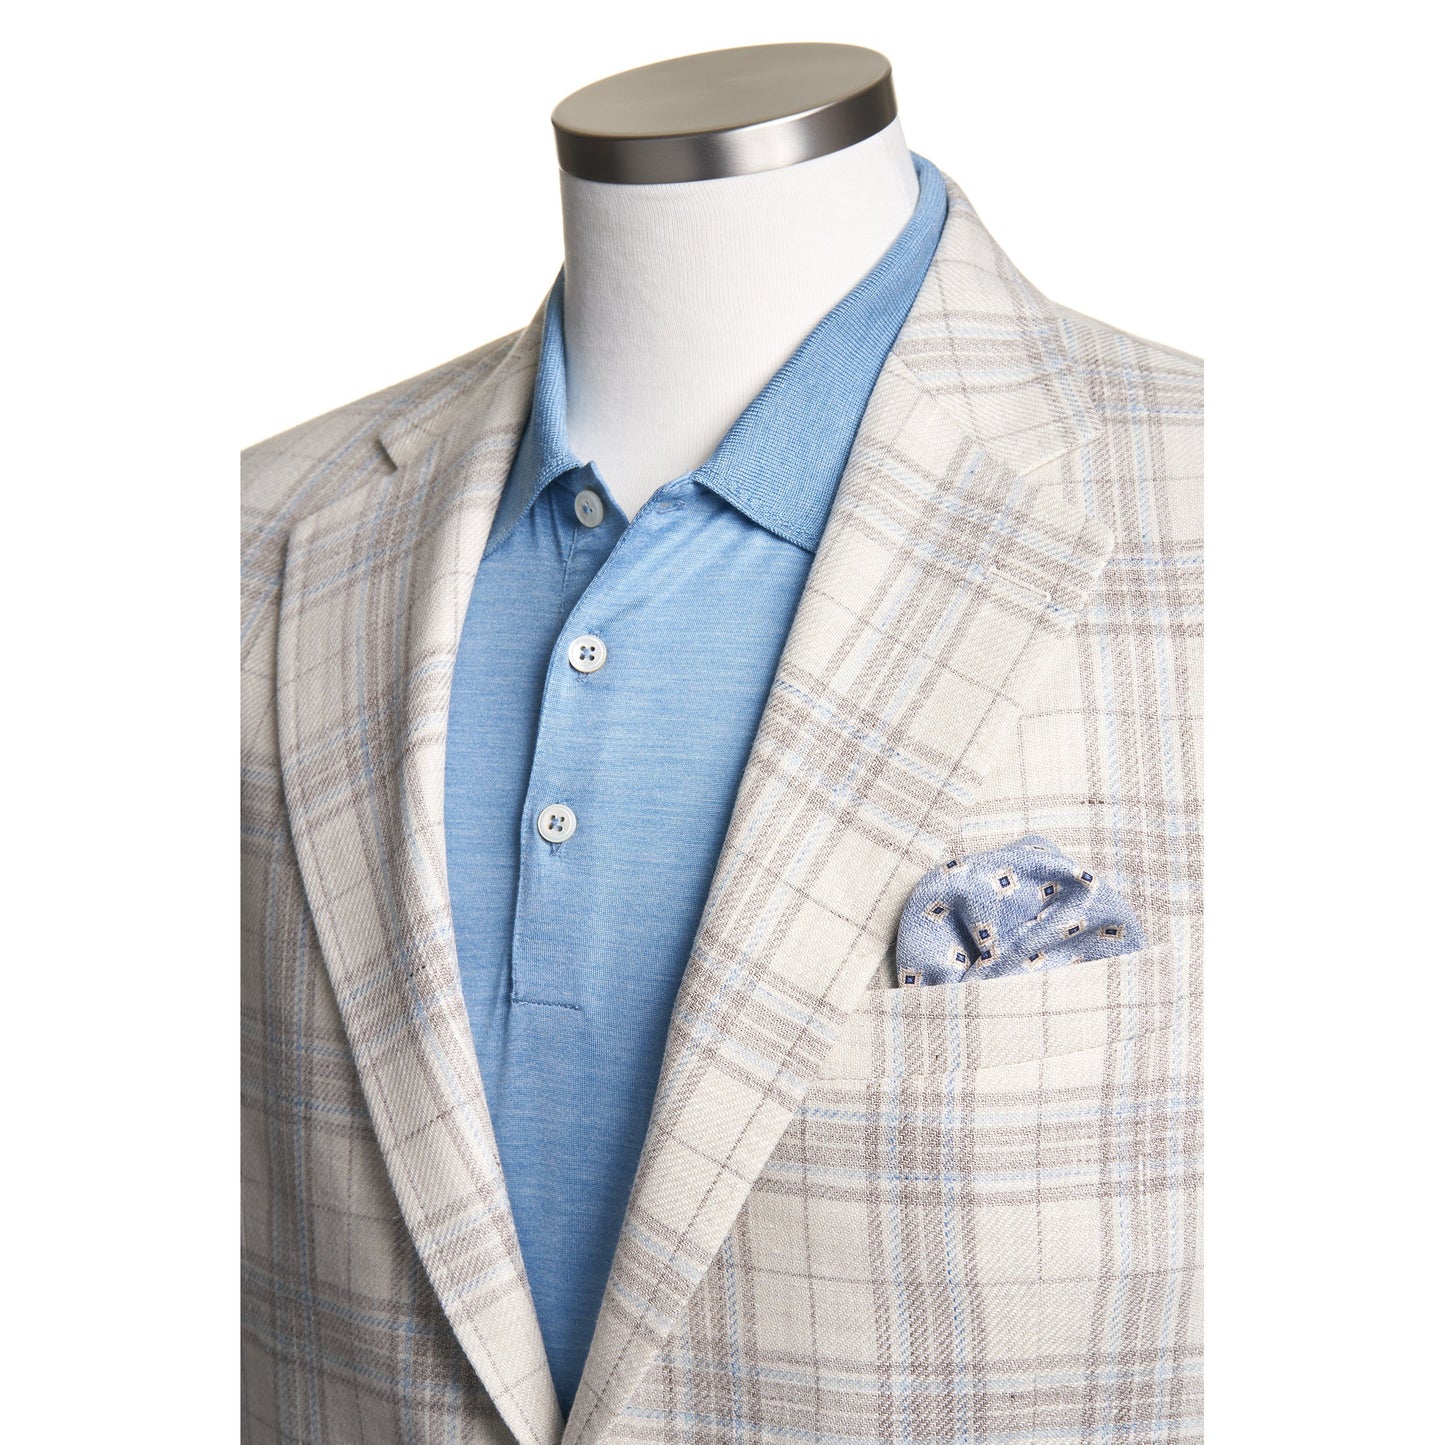 Uomo Wool-Linen Blend, Soft-Shoulder Sport Coat in Off White and Light Blue Plaid